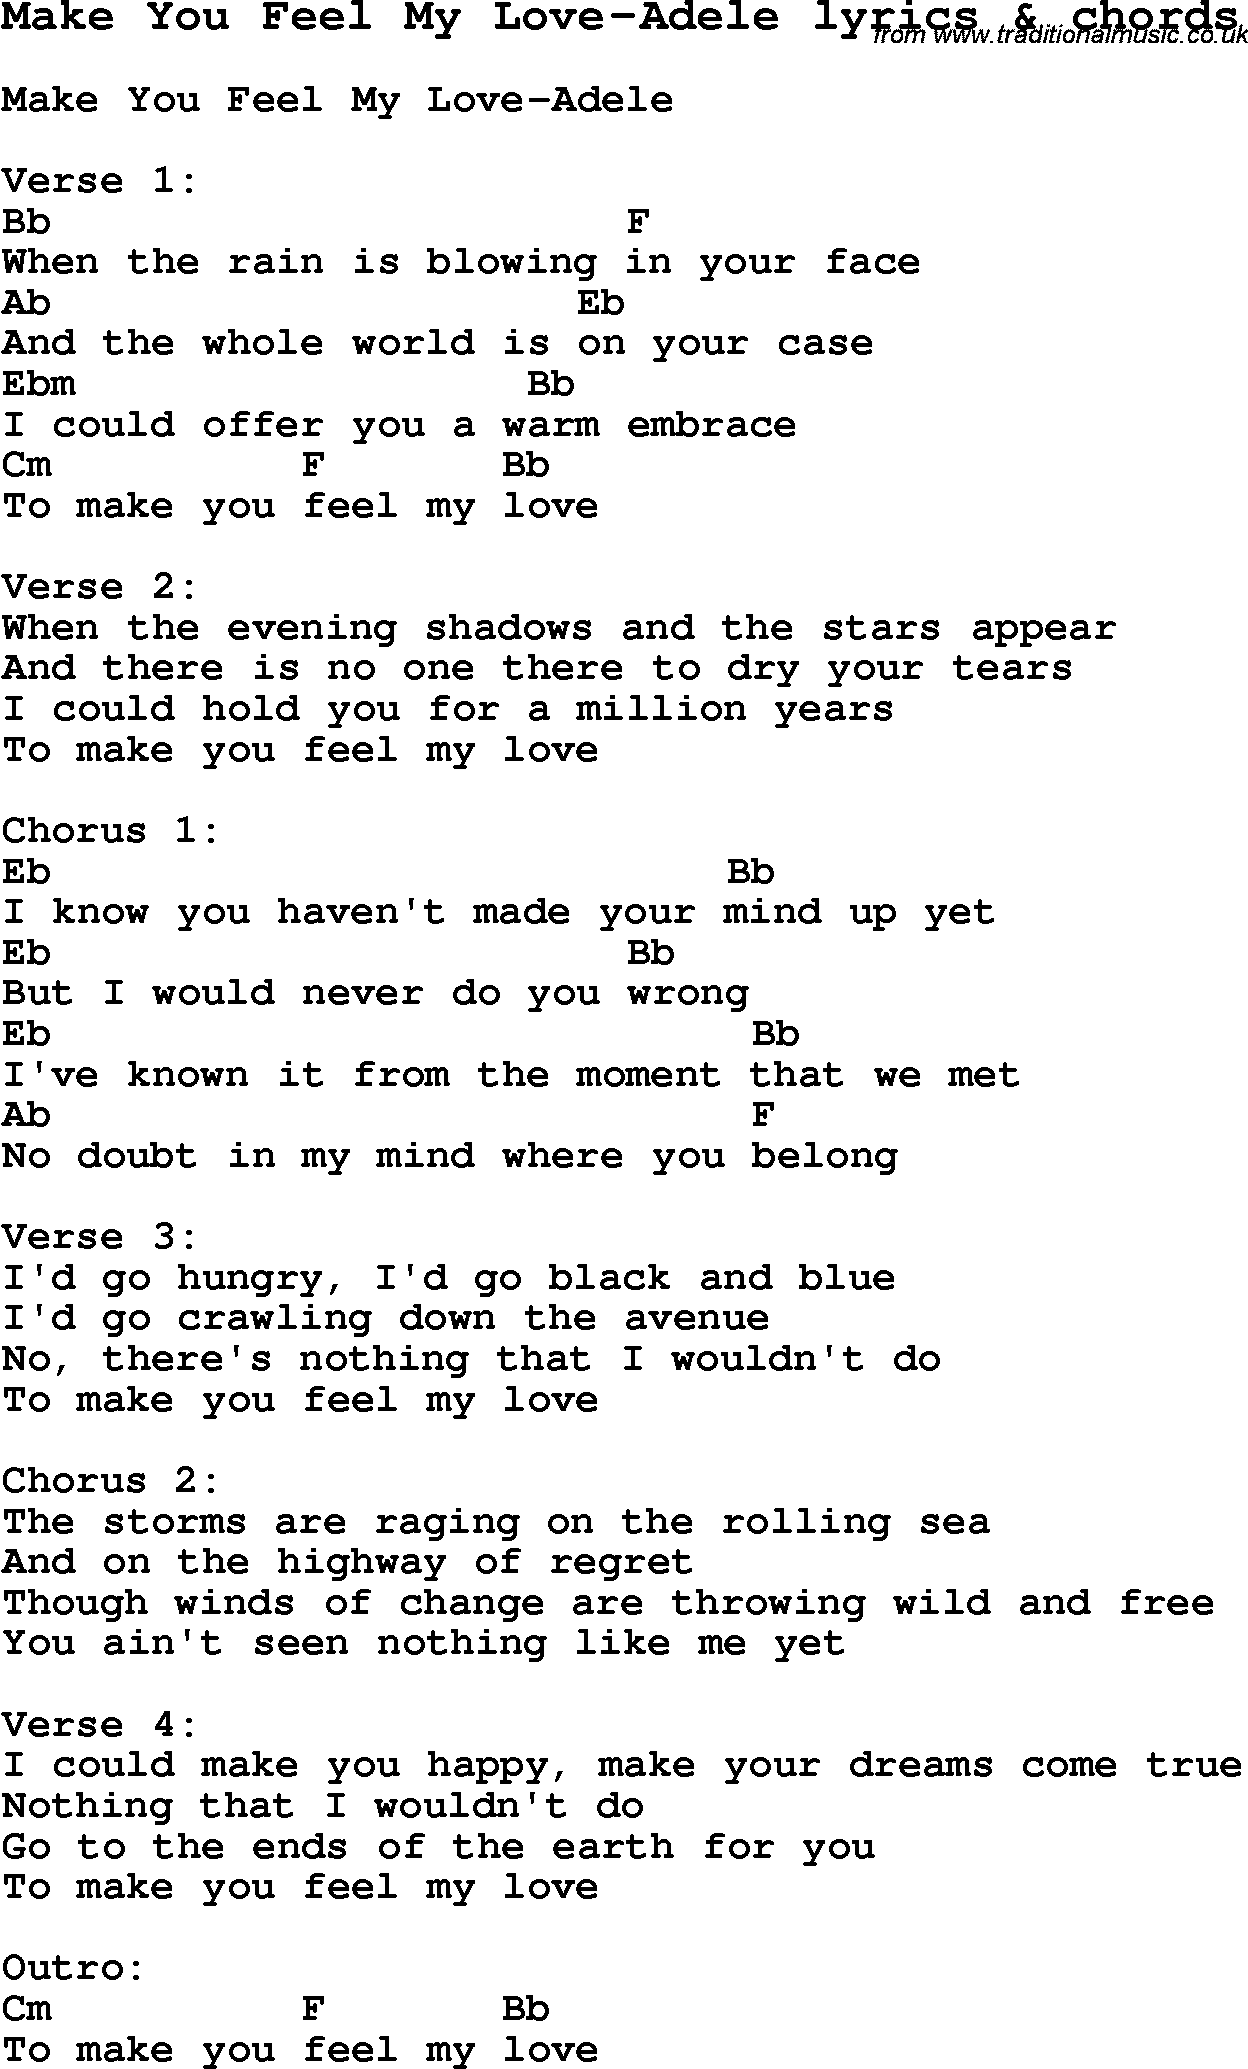 adele lovesong lyrics